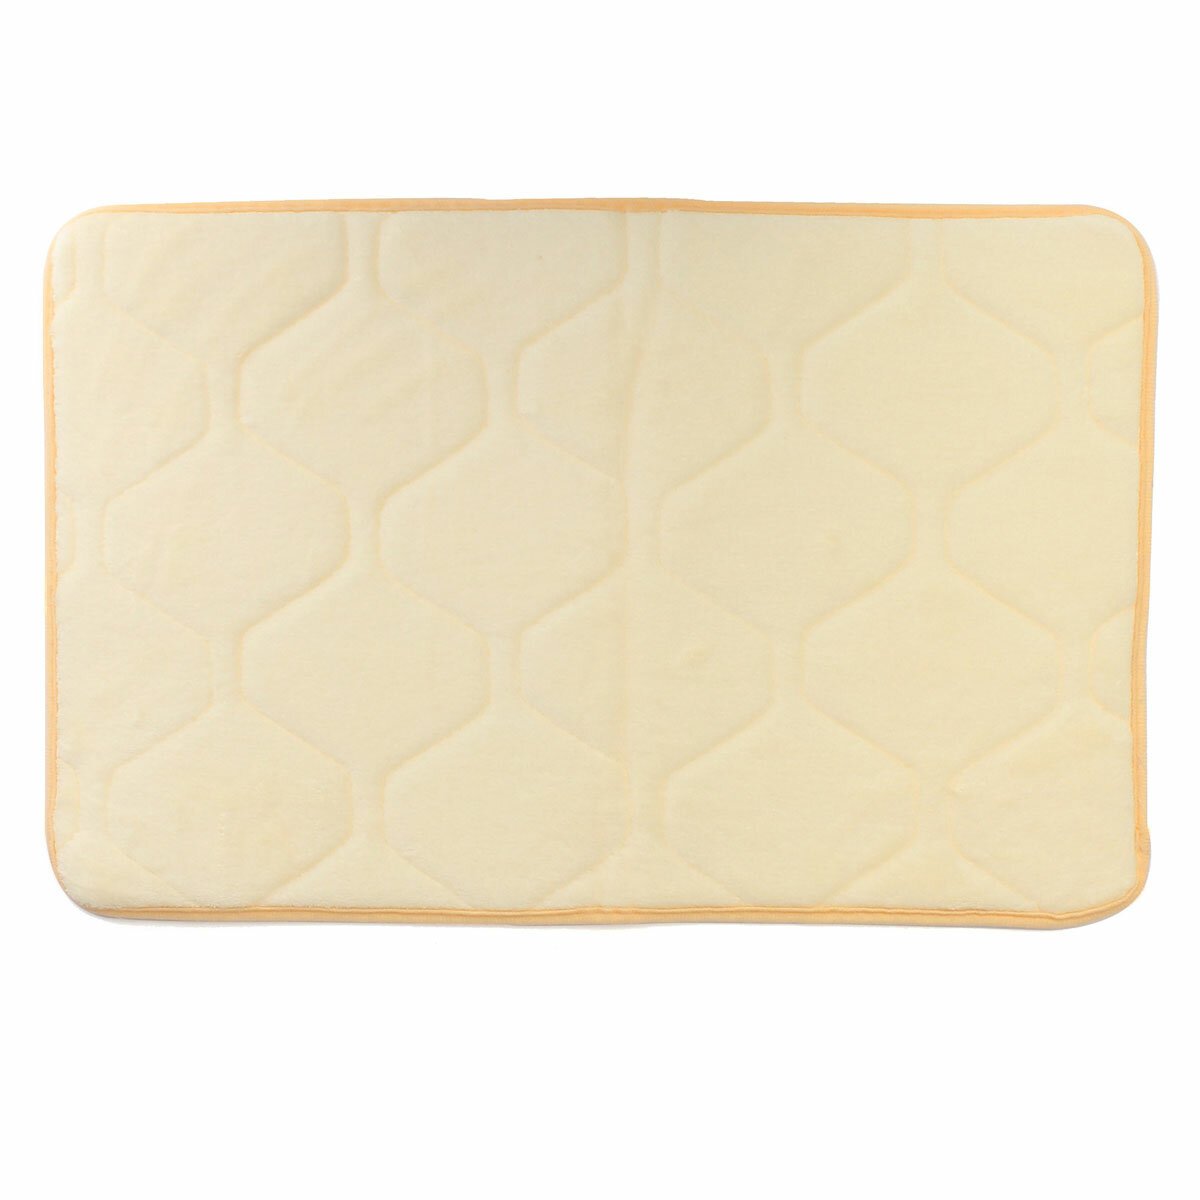 40x60cm Absorbent Soft Memory Foam Mat Bath Rug Antislip Carpet